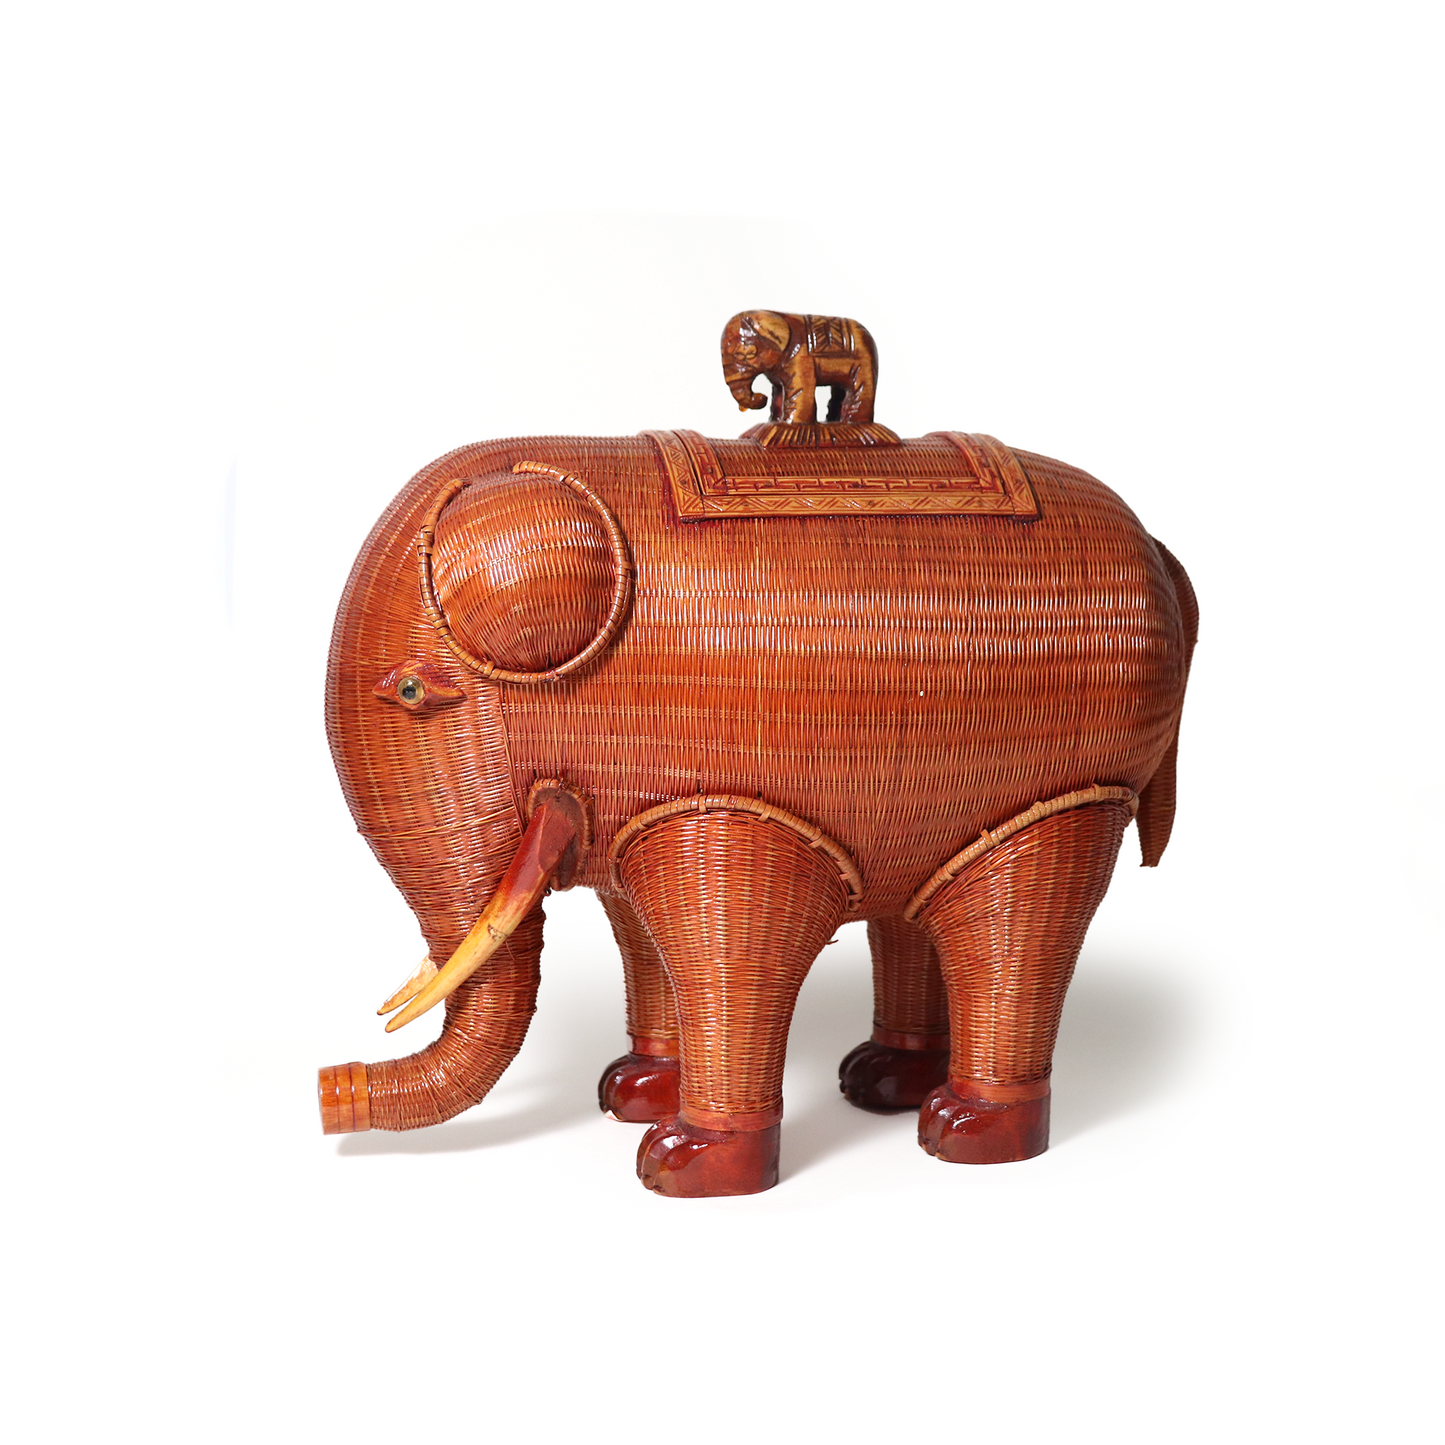 Shanghai handicrafts elephant